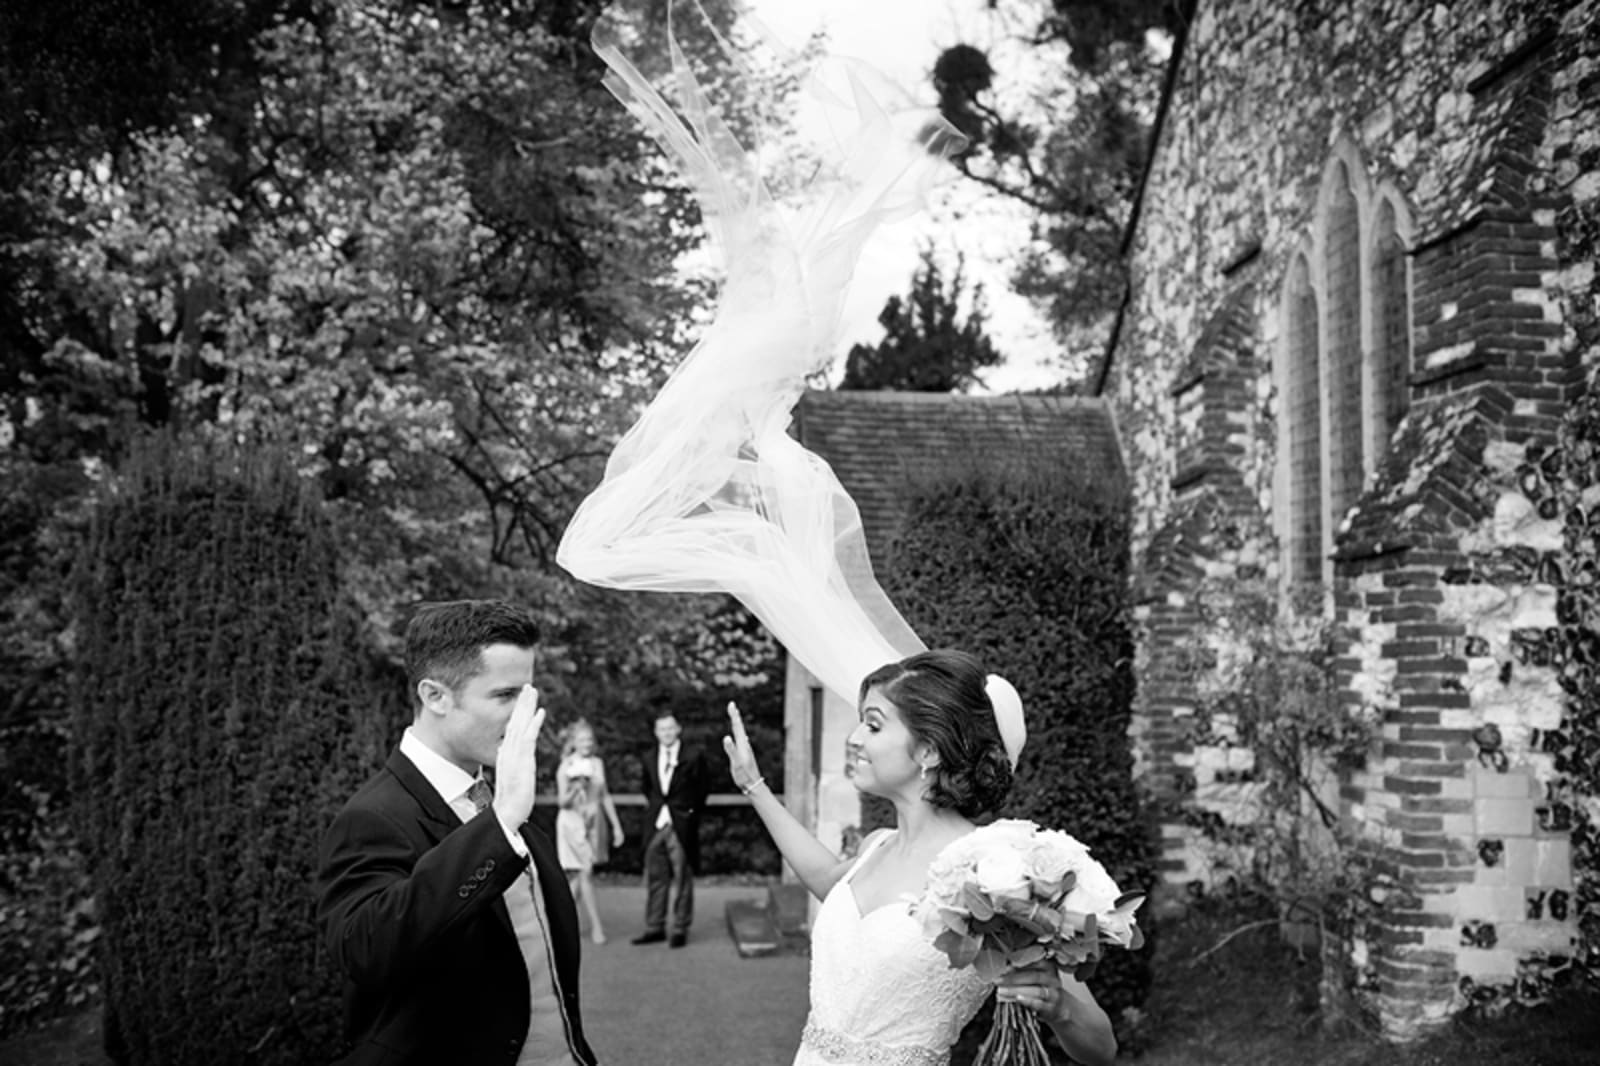 South East | Buckinghamshire | Maidenhead | Autumn | Classic | Neutrals | Pink | Country House | Real Wedding | Guy Hearn Photography #Bridebook #RealWedding #WeddingIdeas Bridebook.co.uk 